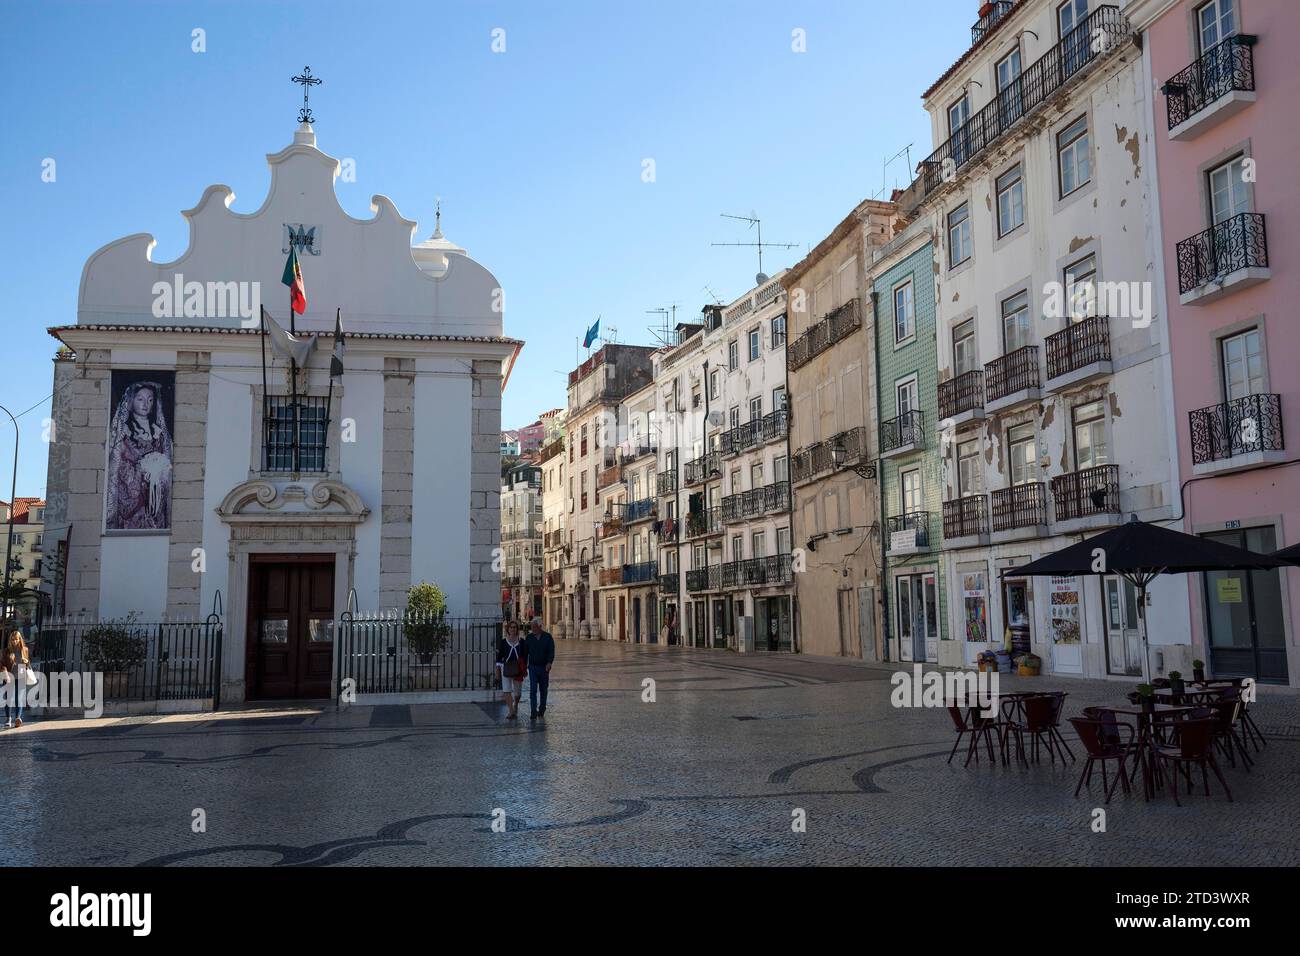 Capela de Nossa Senhora da Saude, on the right Old town houses in Rua da Mouraria, Lisbon, Portugal Stock Photo